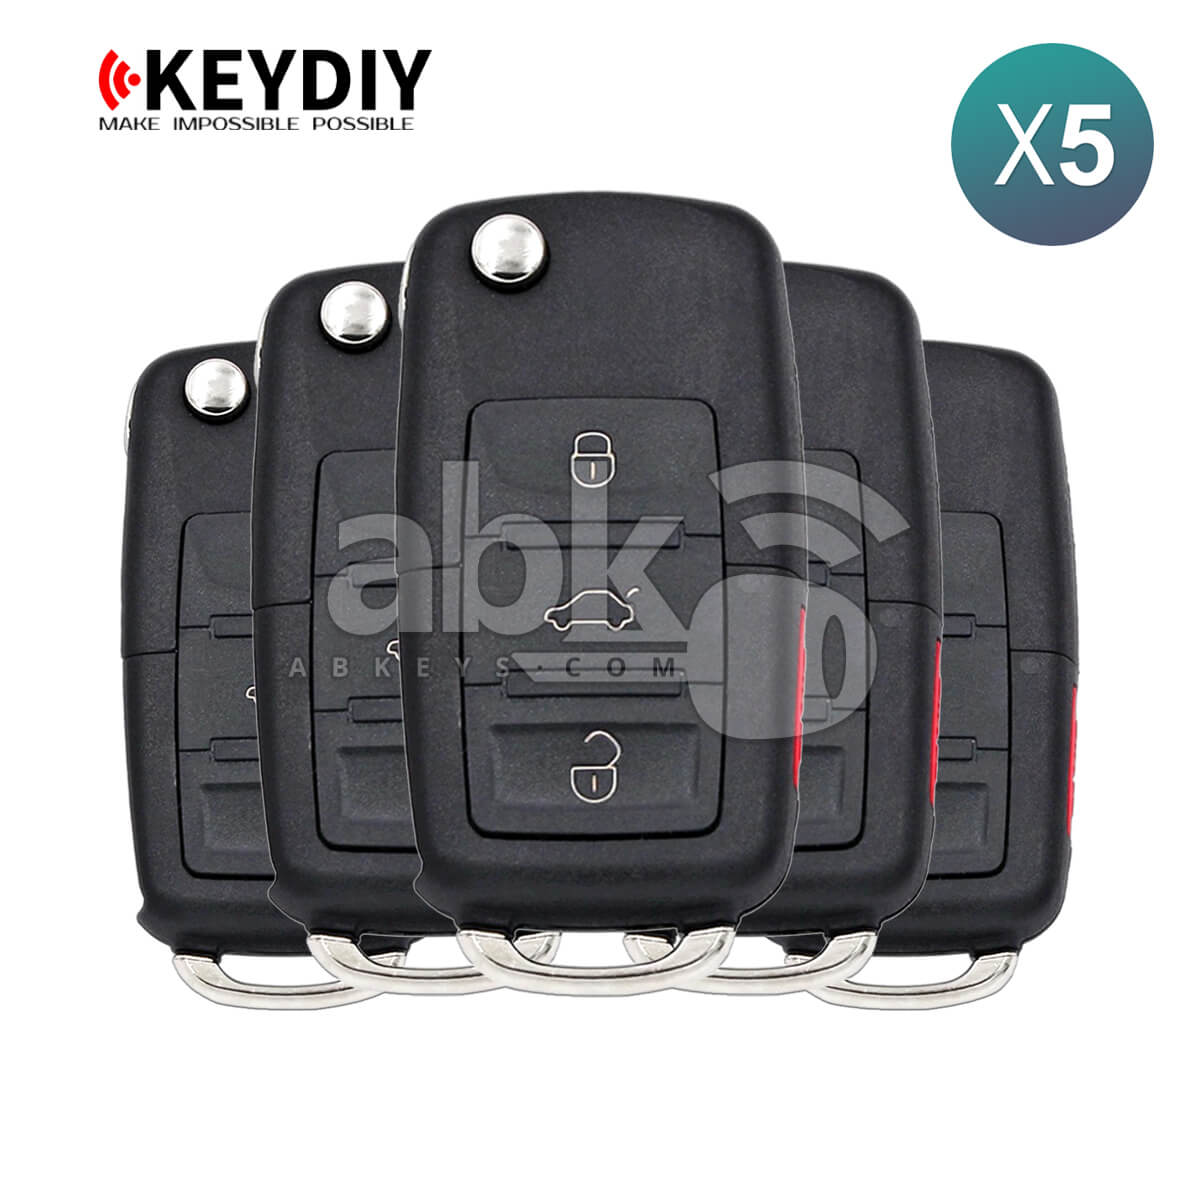 KeyDiy KD Universal Remote B Series Volkswagen Type With 4Buttons B01-3+1 5Pcs Bundle